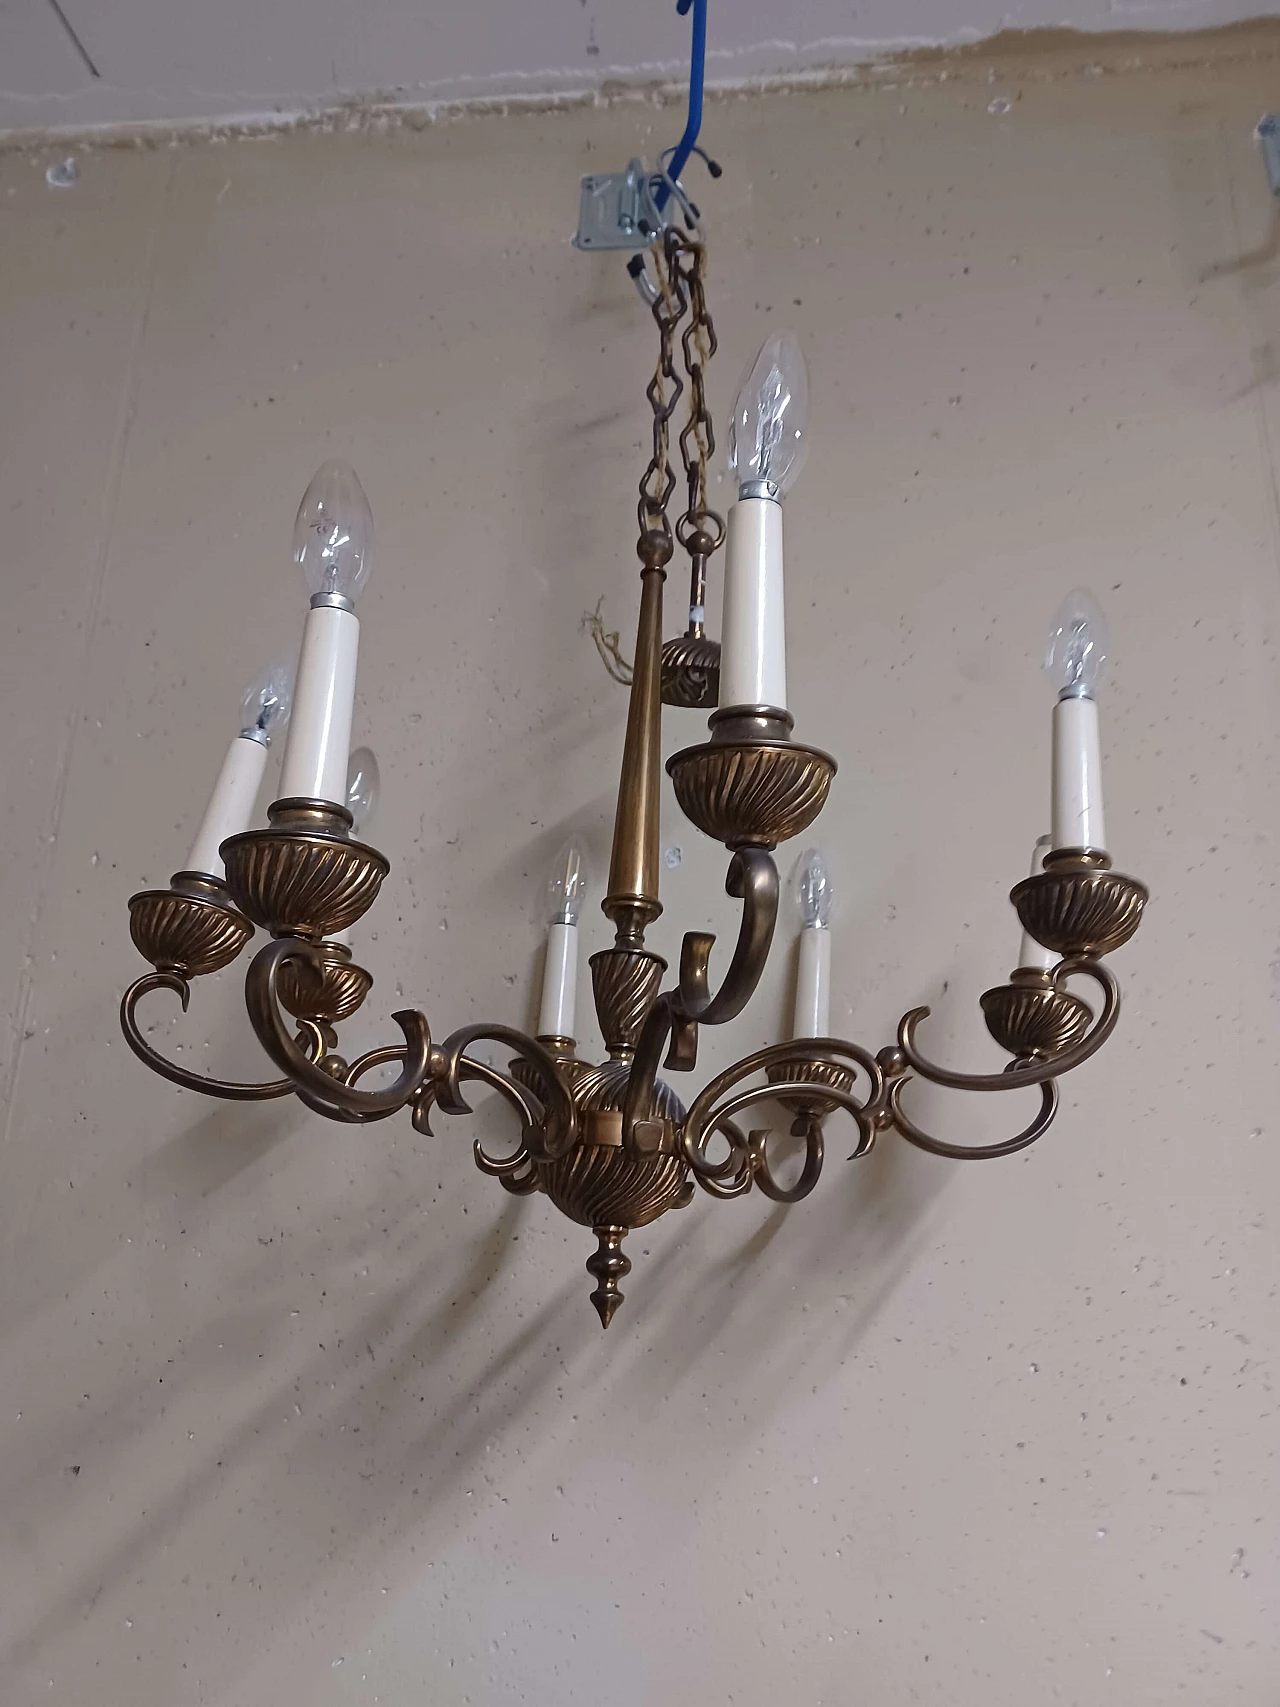 3 Bronze and brass chandeliers, 1950s 1343500